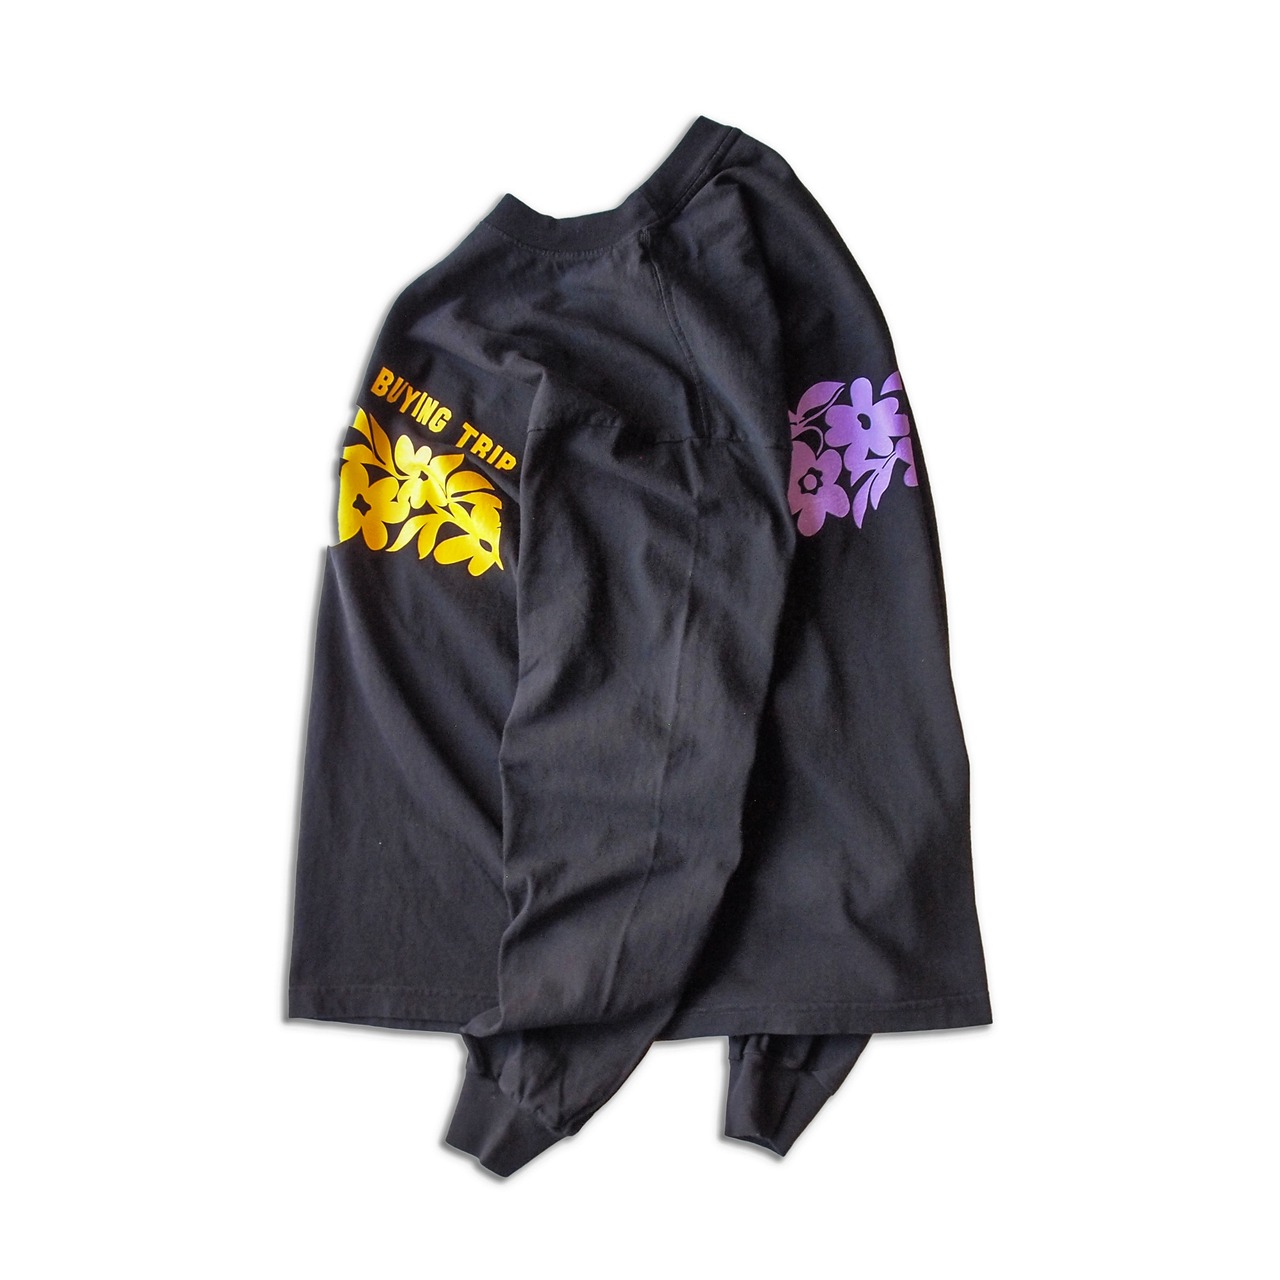 【BUYING TRIP】"Flower" Garment Dye Long Sleeve T-shirt (BLACK DYED)